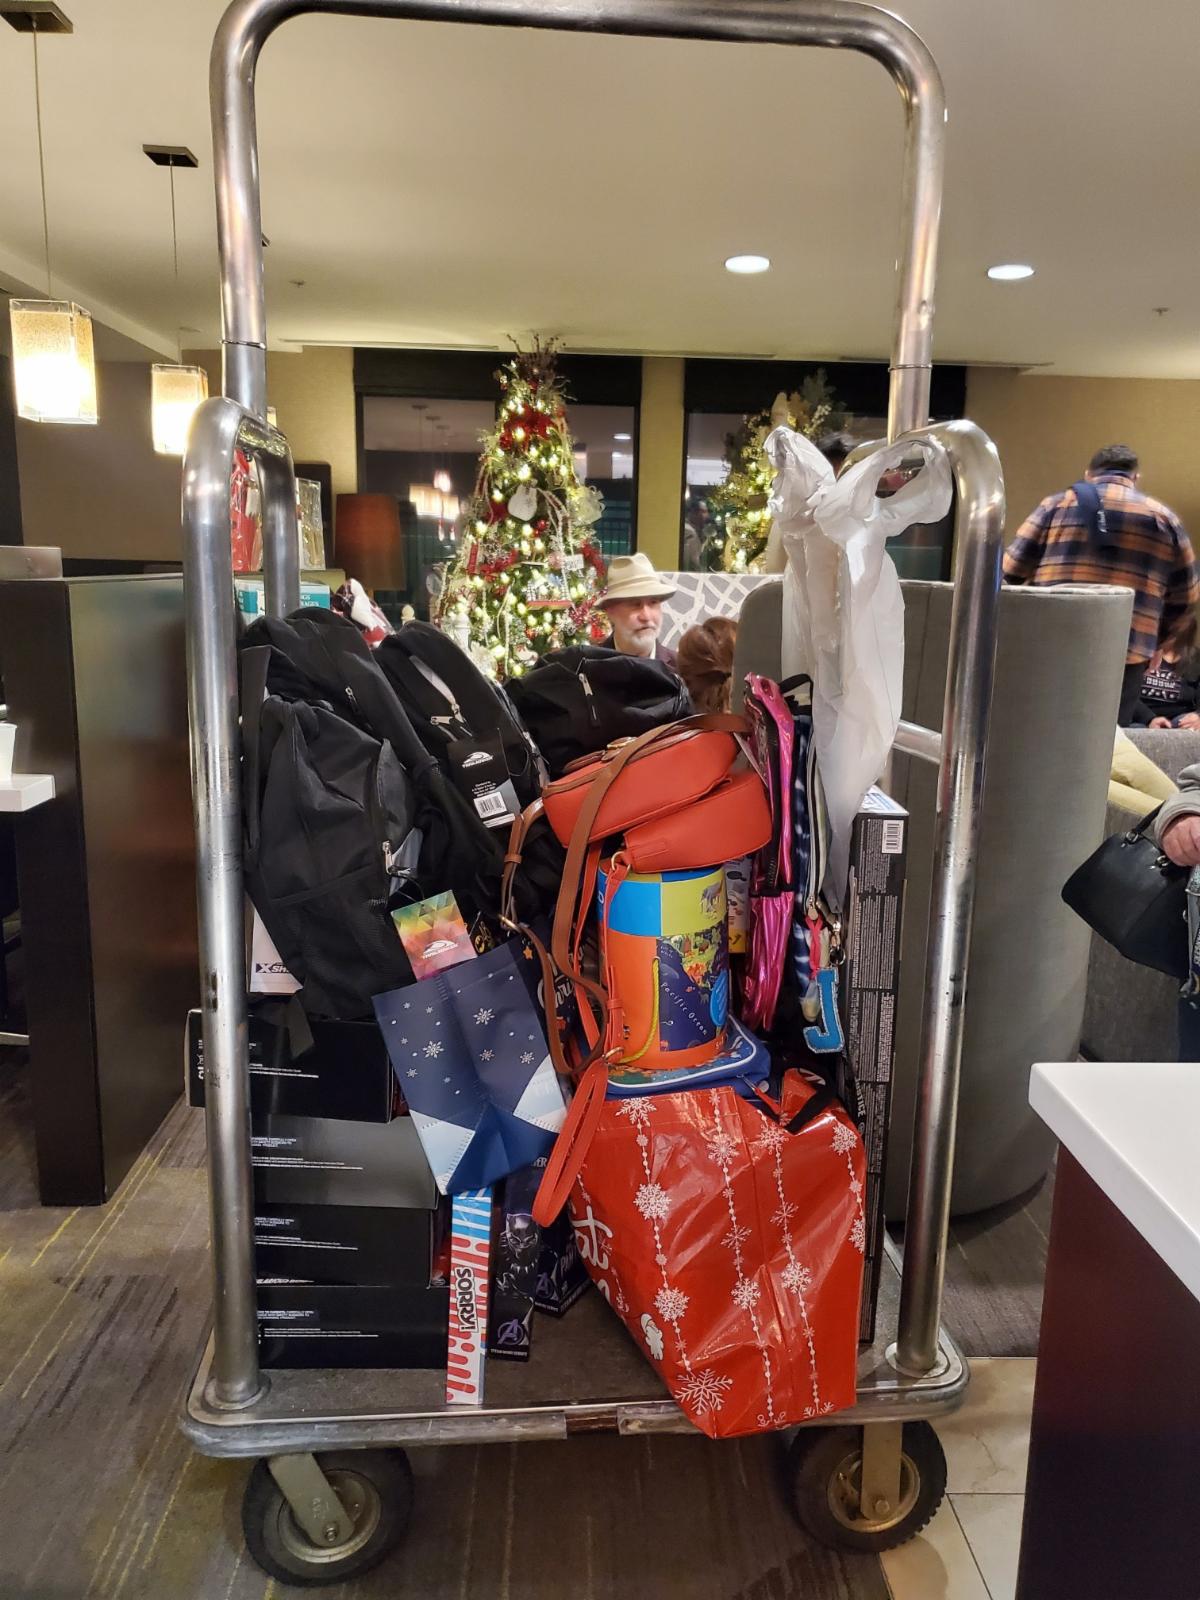 hotel trolley with luggage